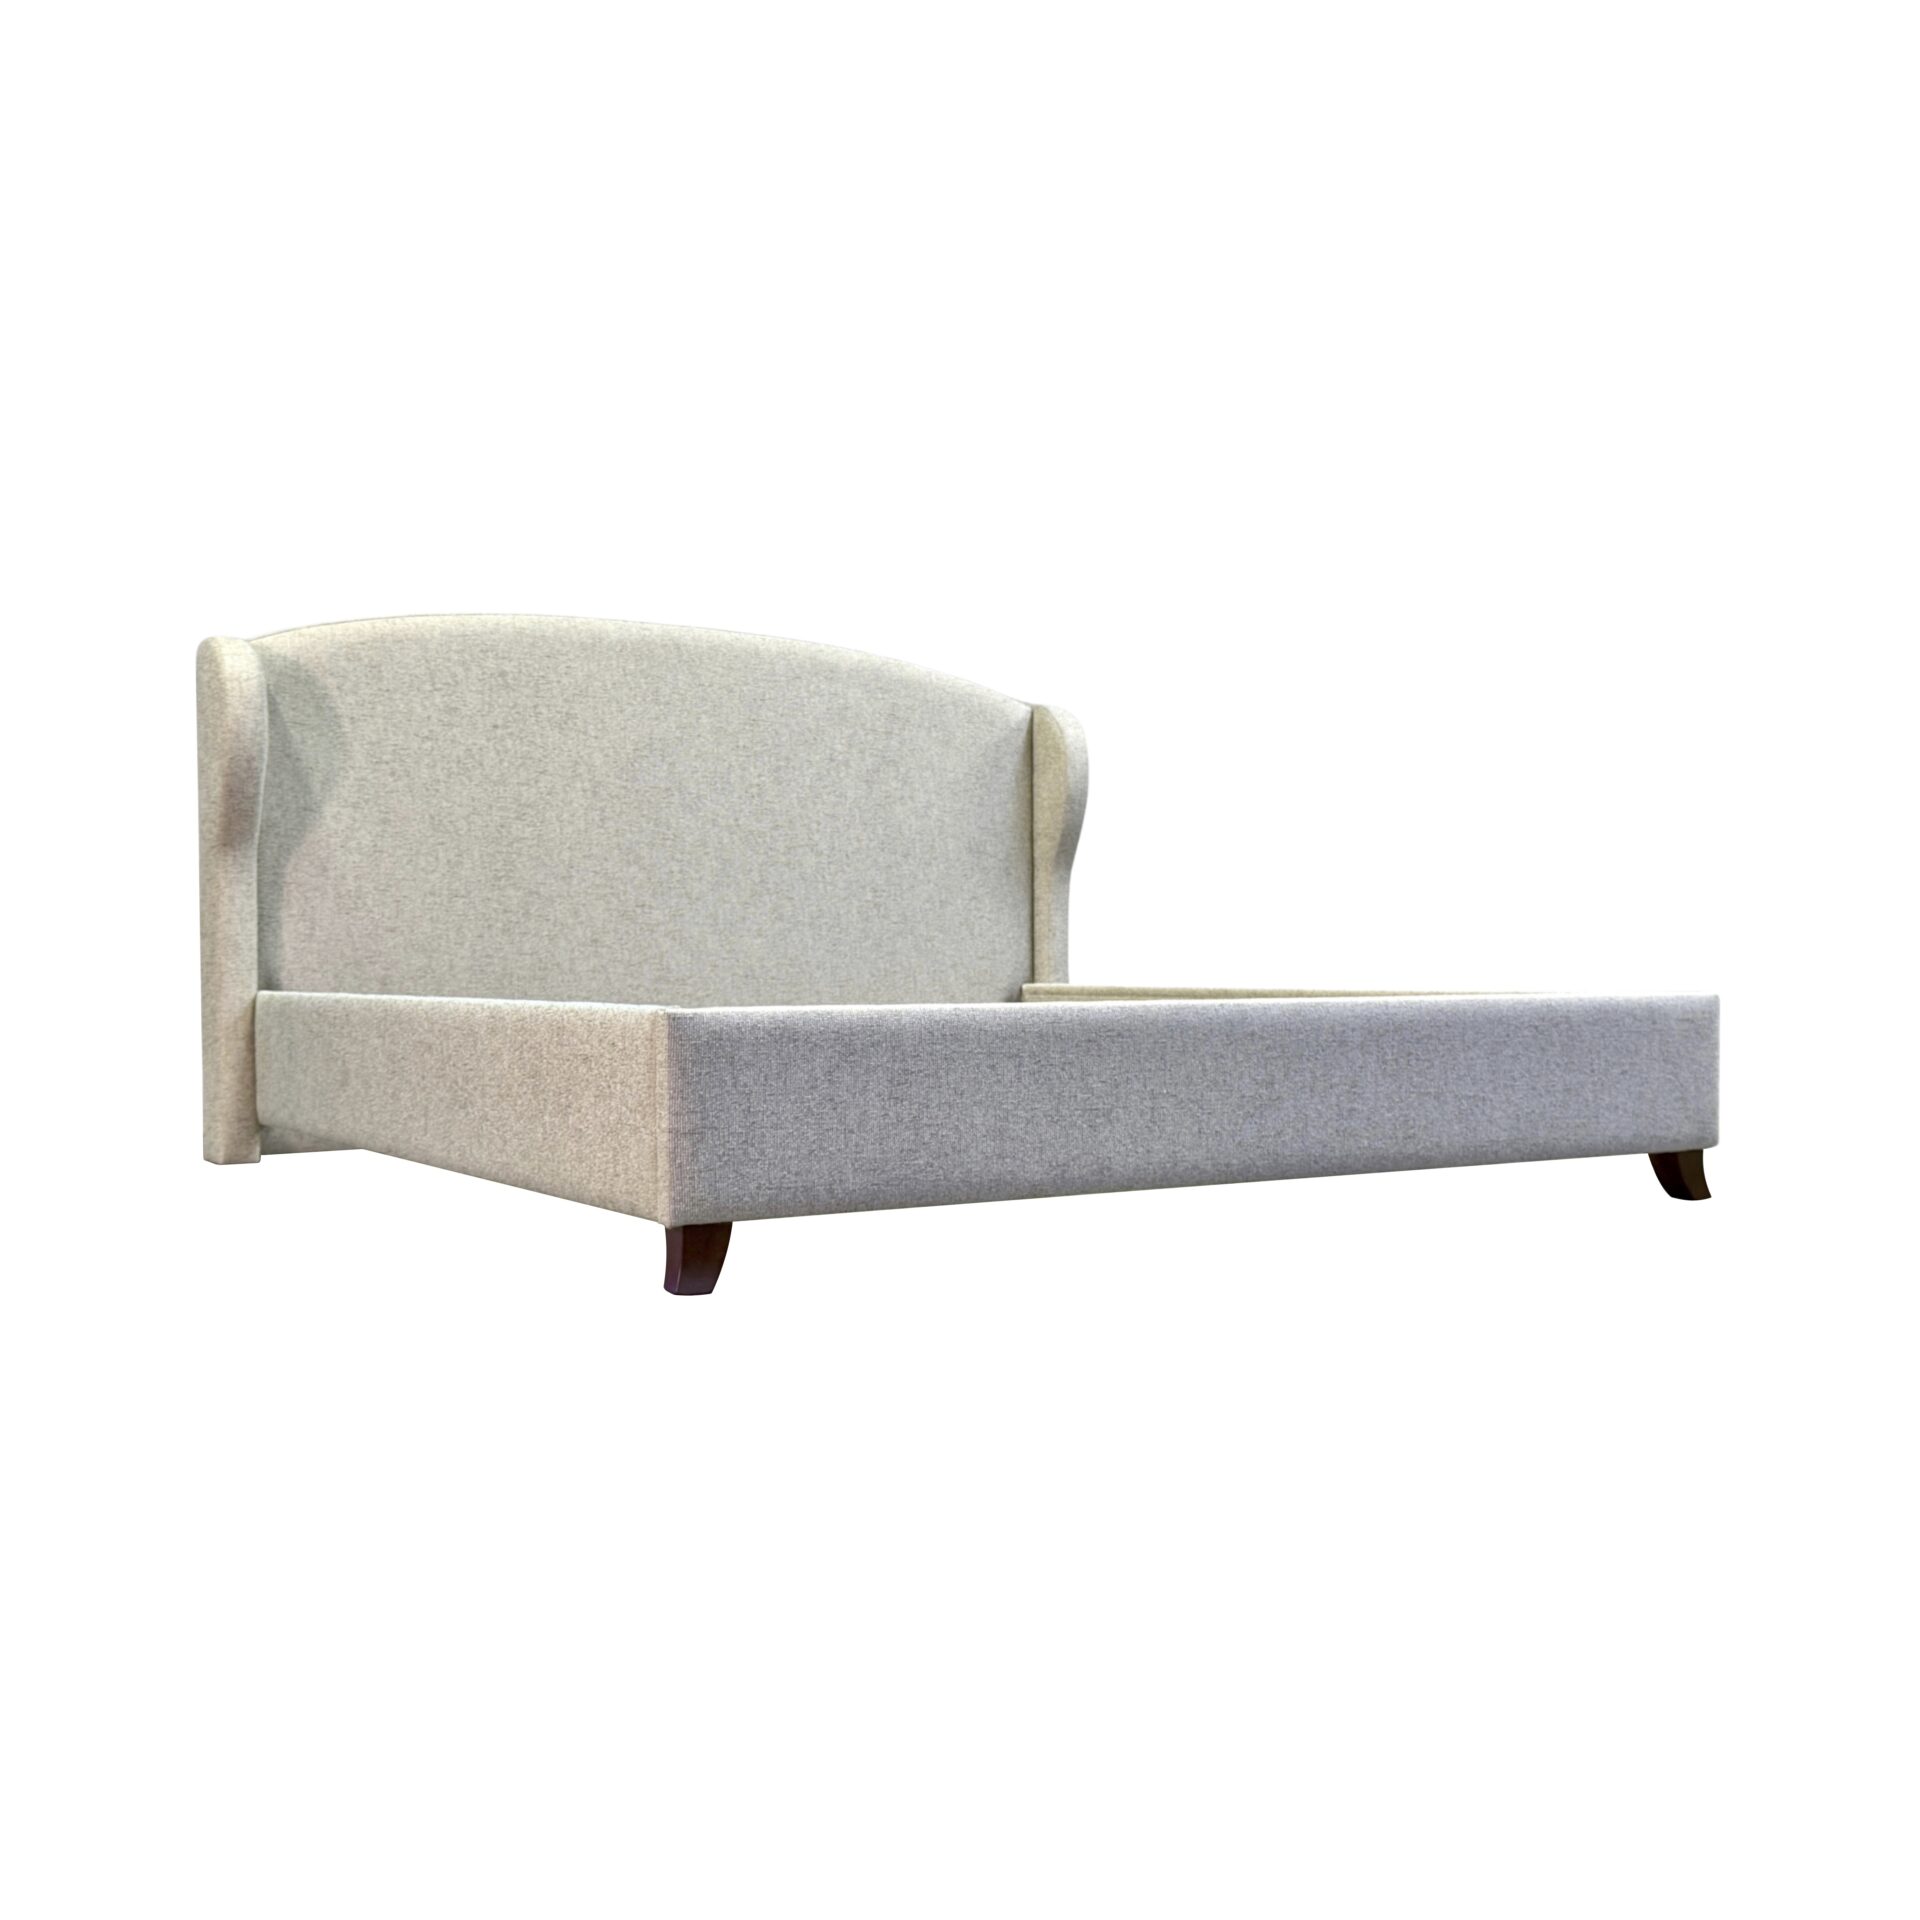 MAGNOLIA-upholstered-freestanding-bed-luxury-furniture-blend-home-furnishings